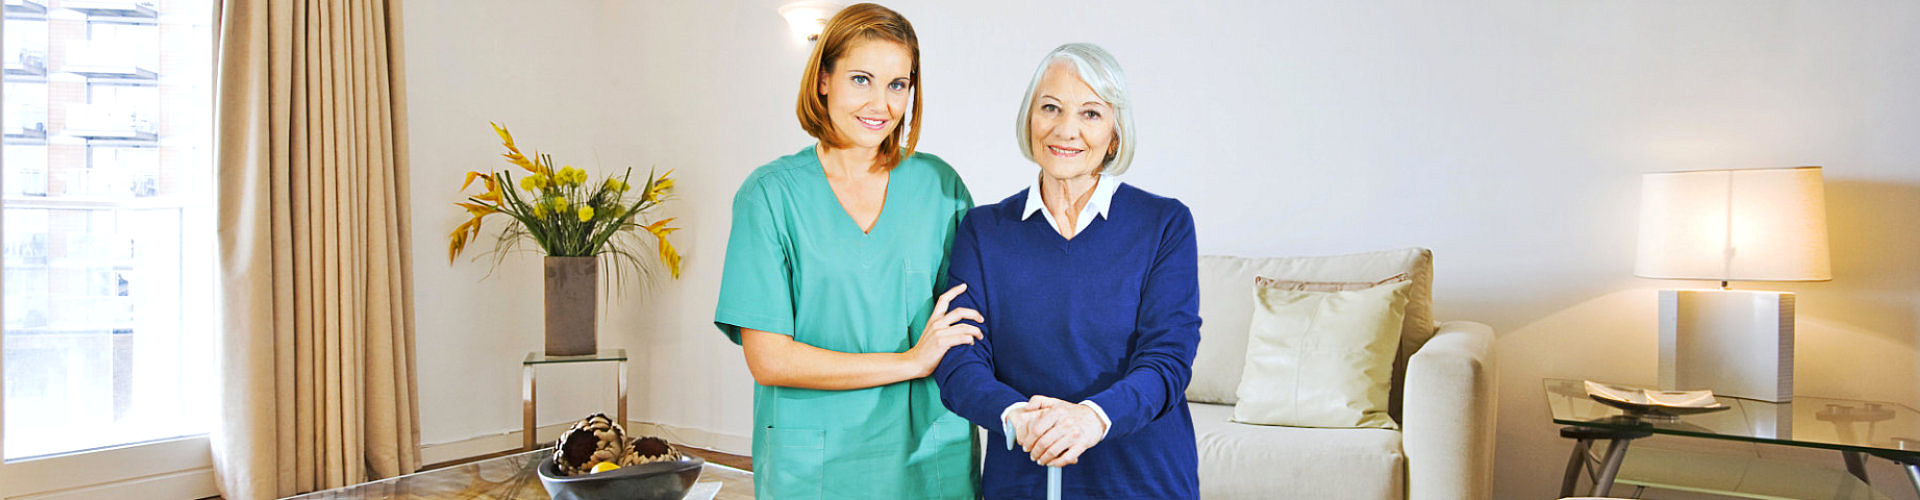 caretaker with her senior patient